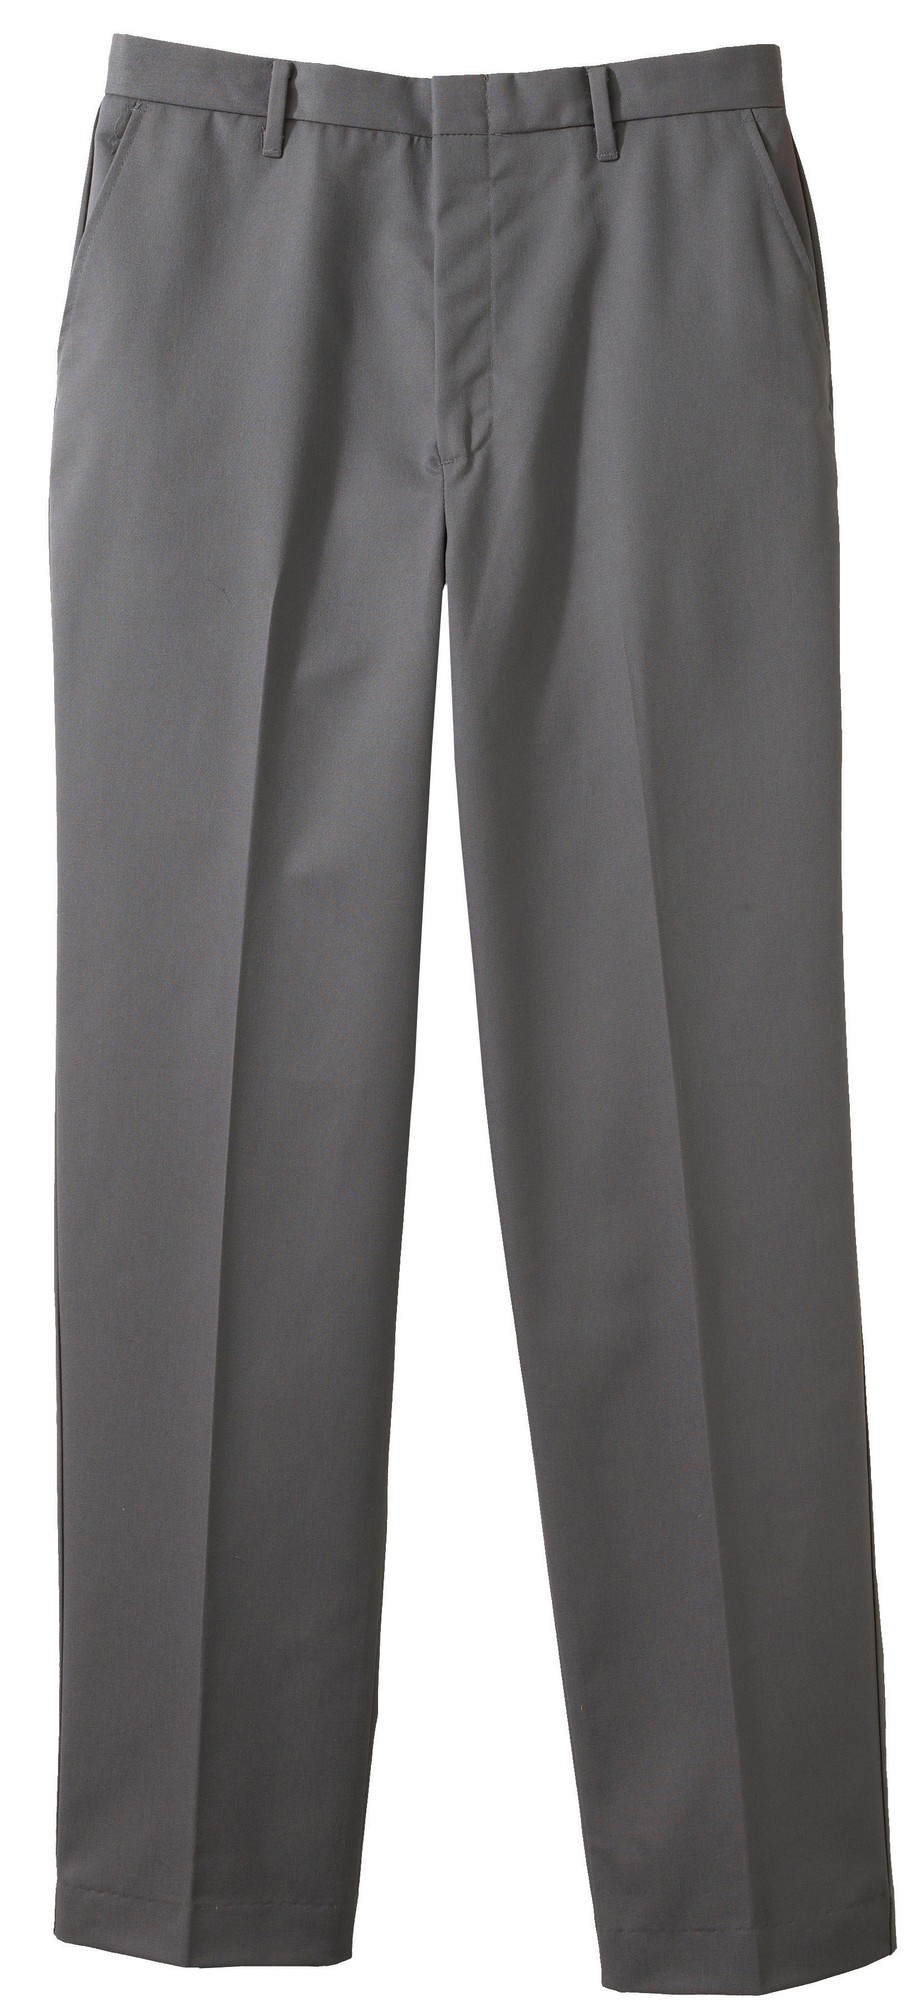 Men's Business Casual Flat Front Pants